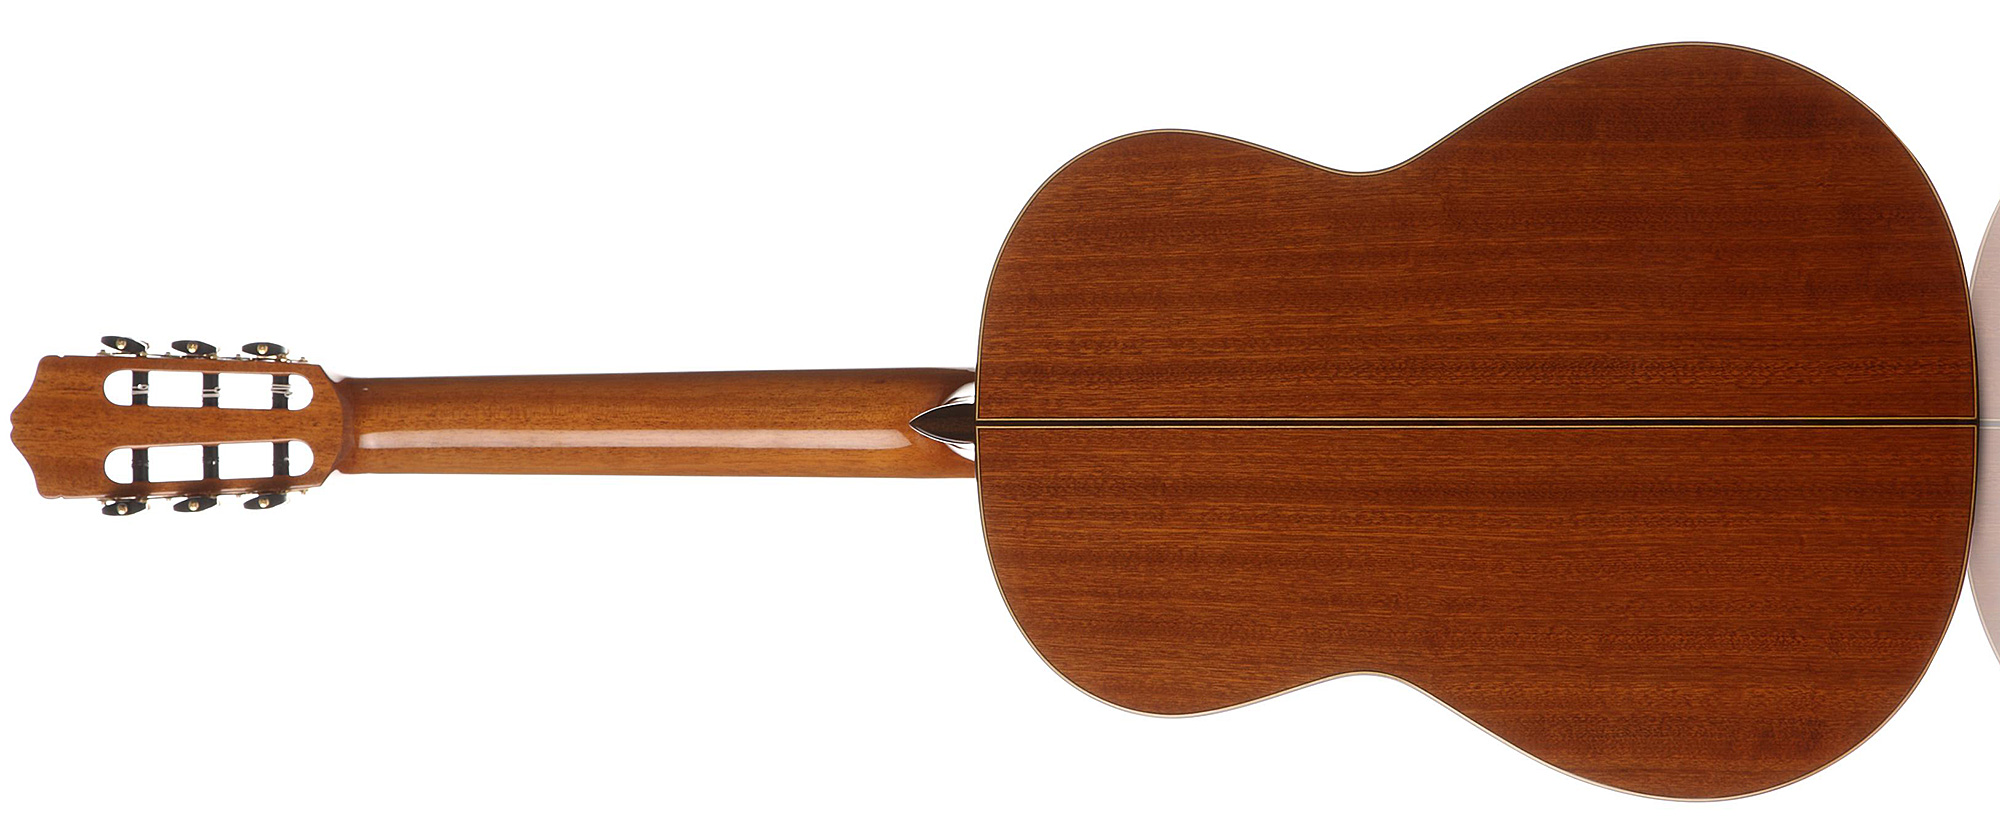 Cordoba C9 Cd Cedar Top Luthier Cedre Acajou Rw - Natural - Classical guitar 4/4 size - Variation 2